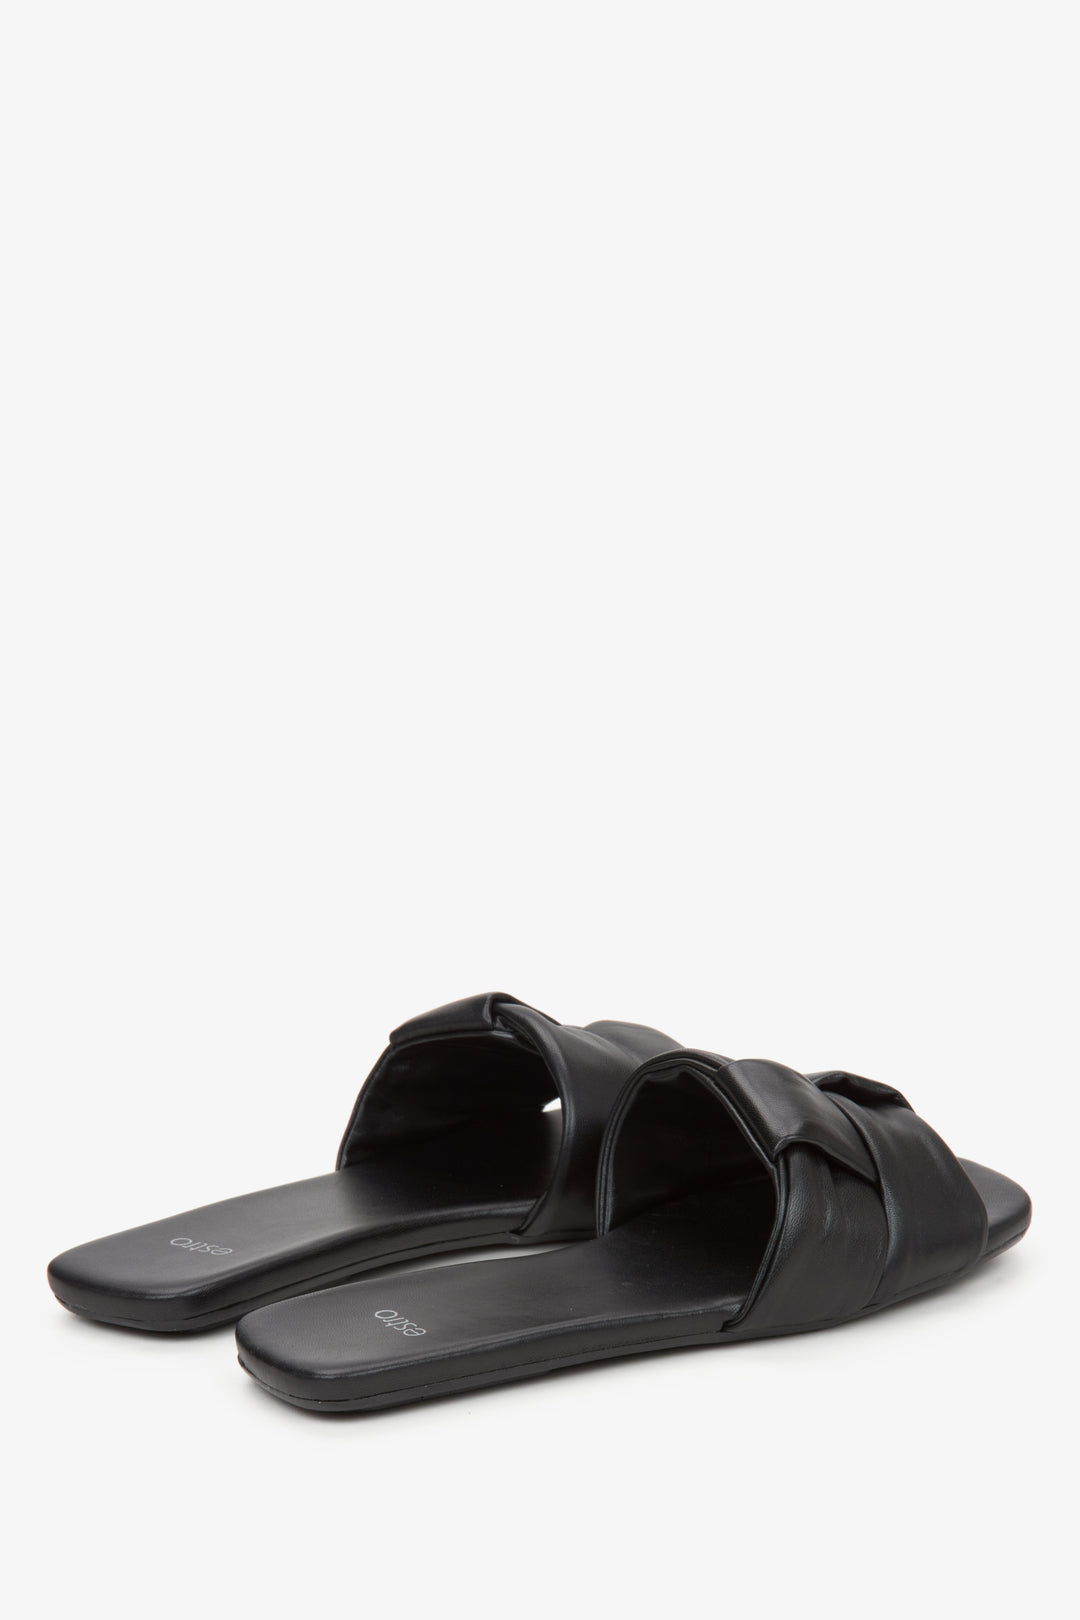 Estro's Black Patch Leather Slide Sandals for Women